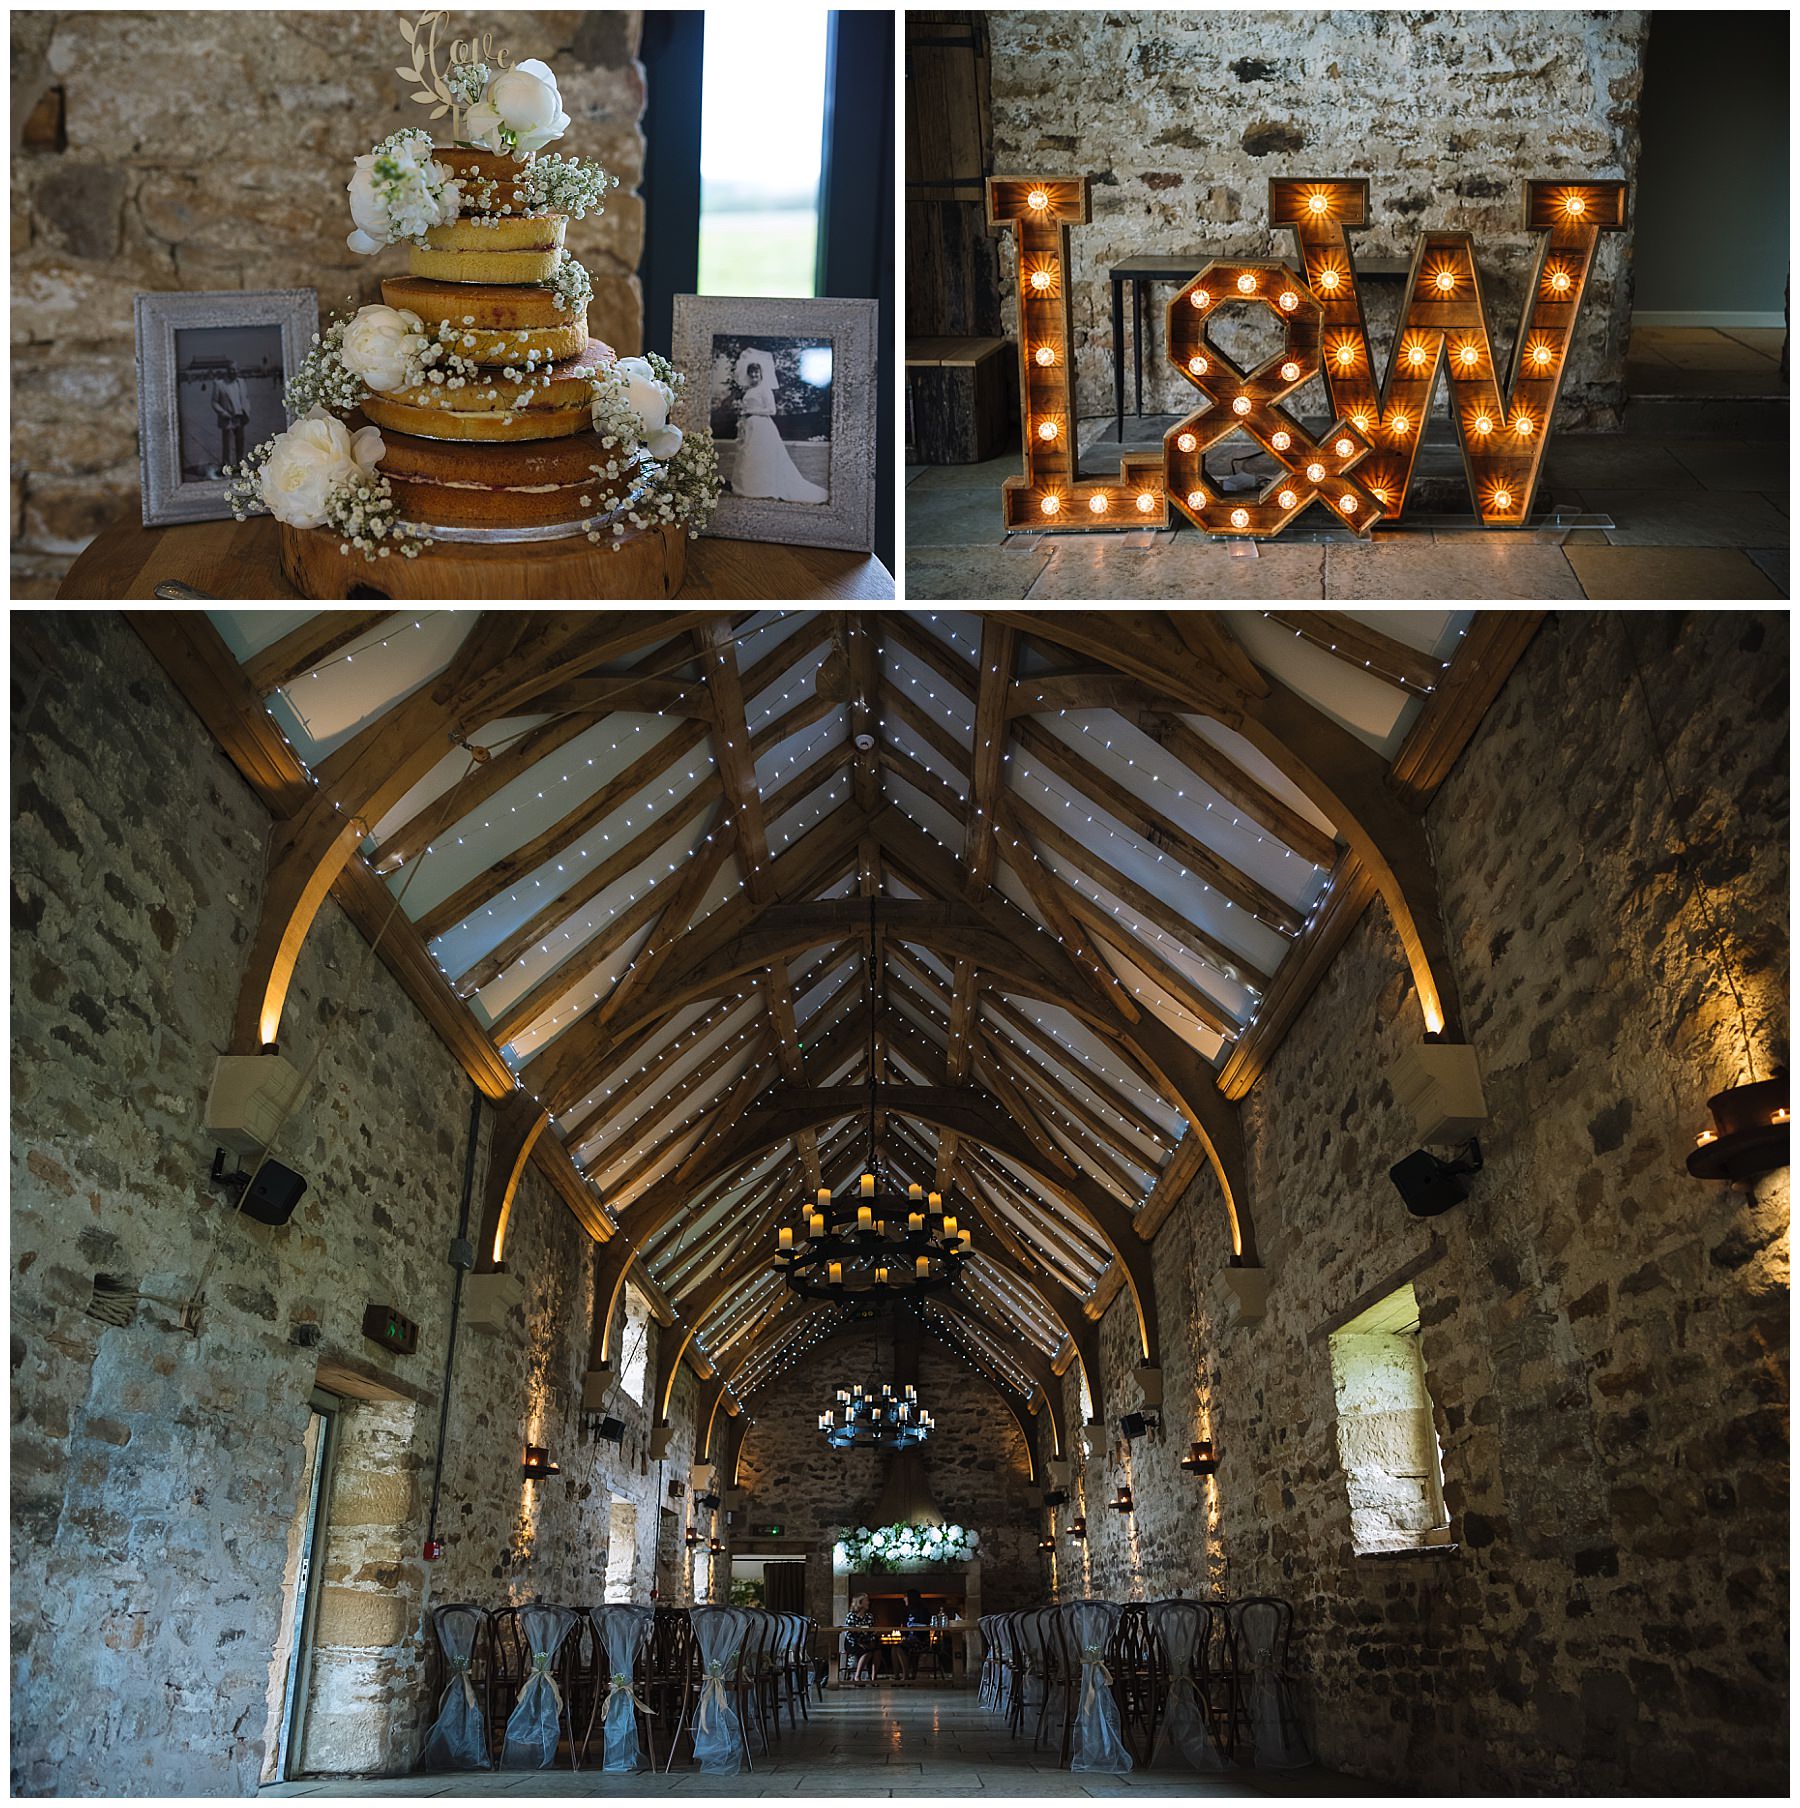 Healey Barn Wedding Venue in the North East Of England